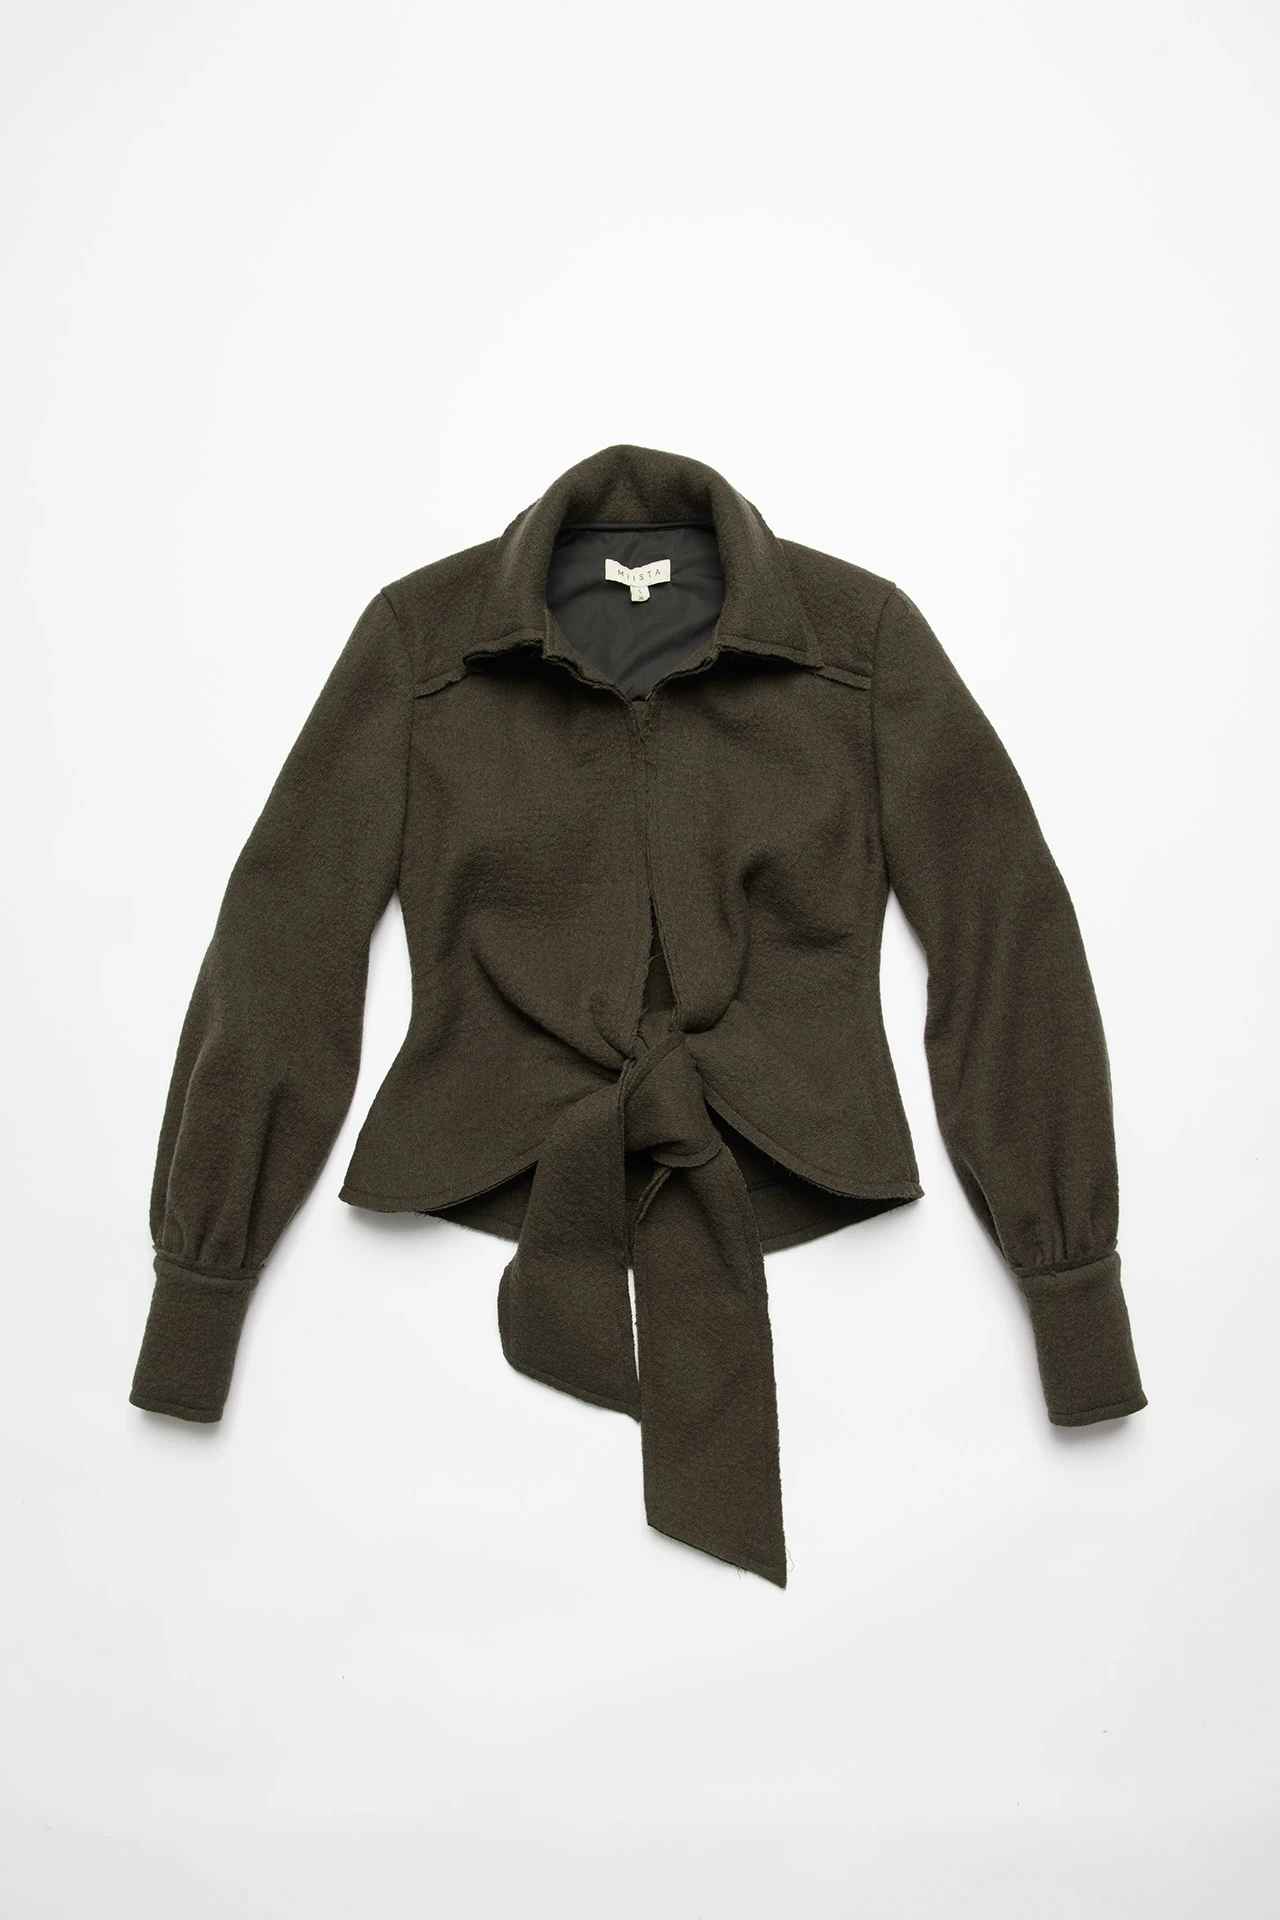 miista-anika-brown-juniper-jacket-06